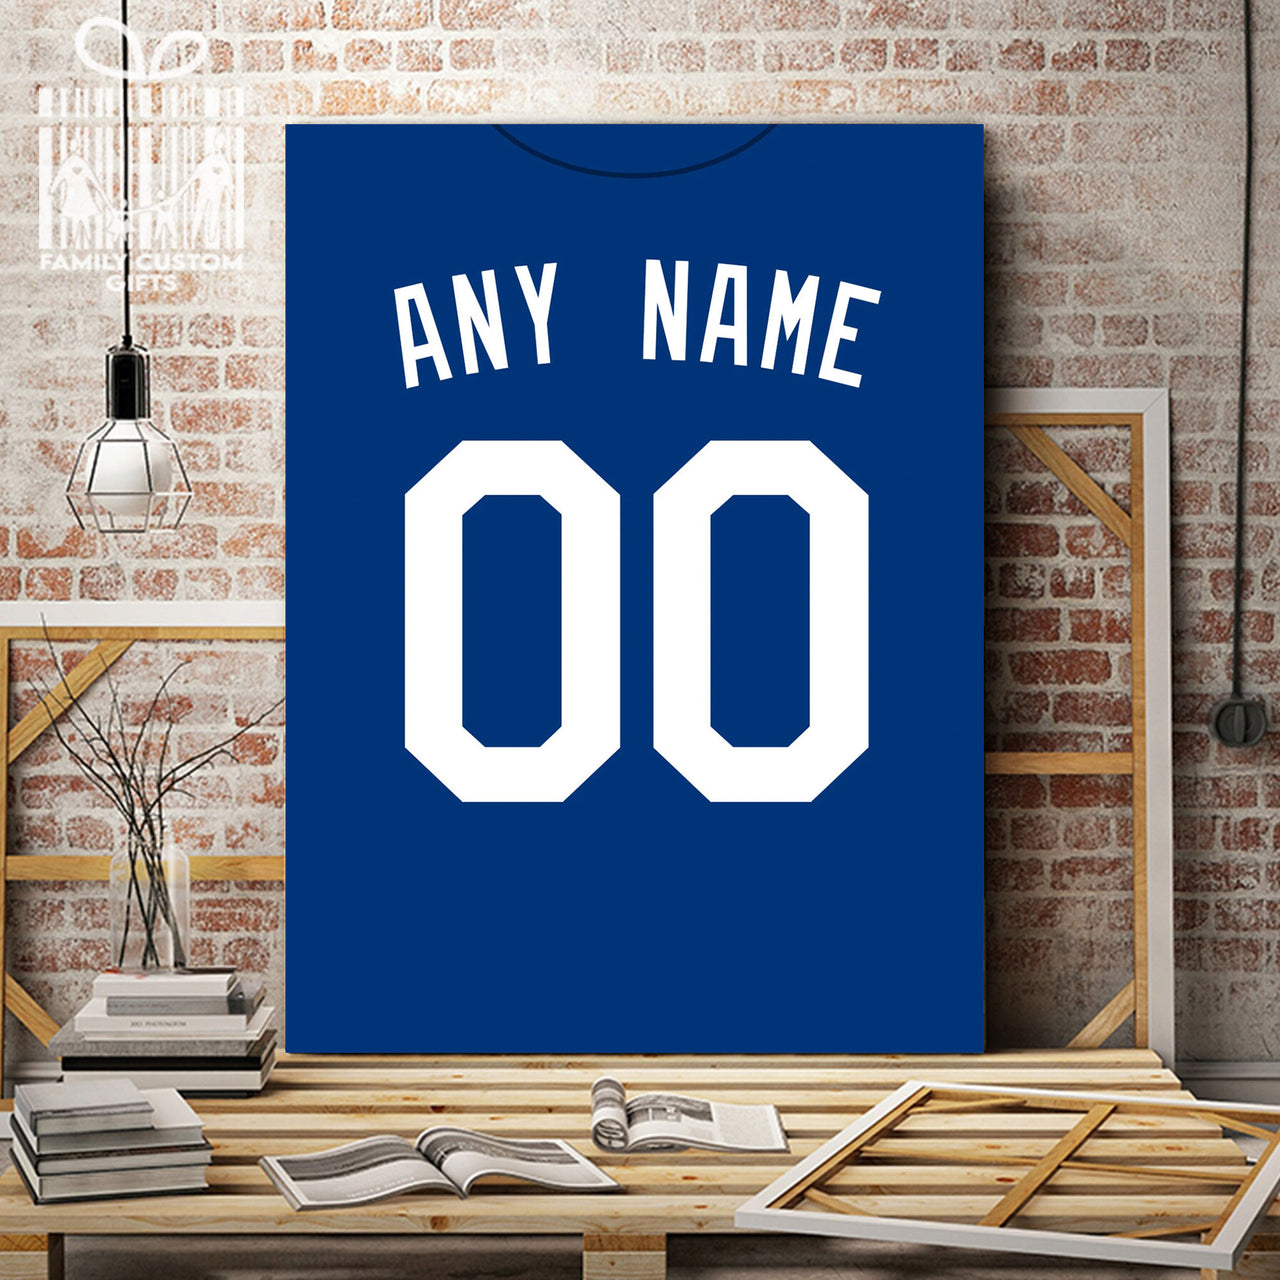 Personalized Los Angeles Dodgers custom Baseball jersey Shirt